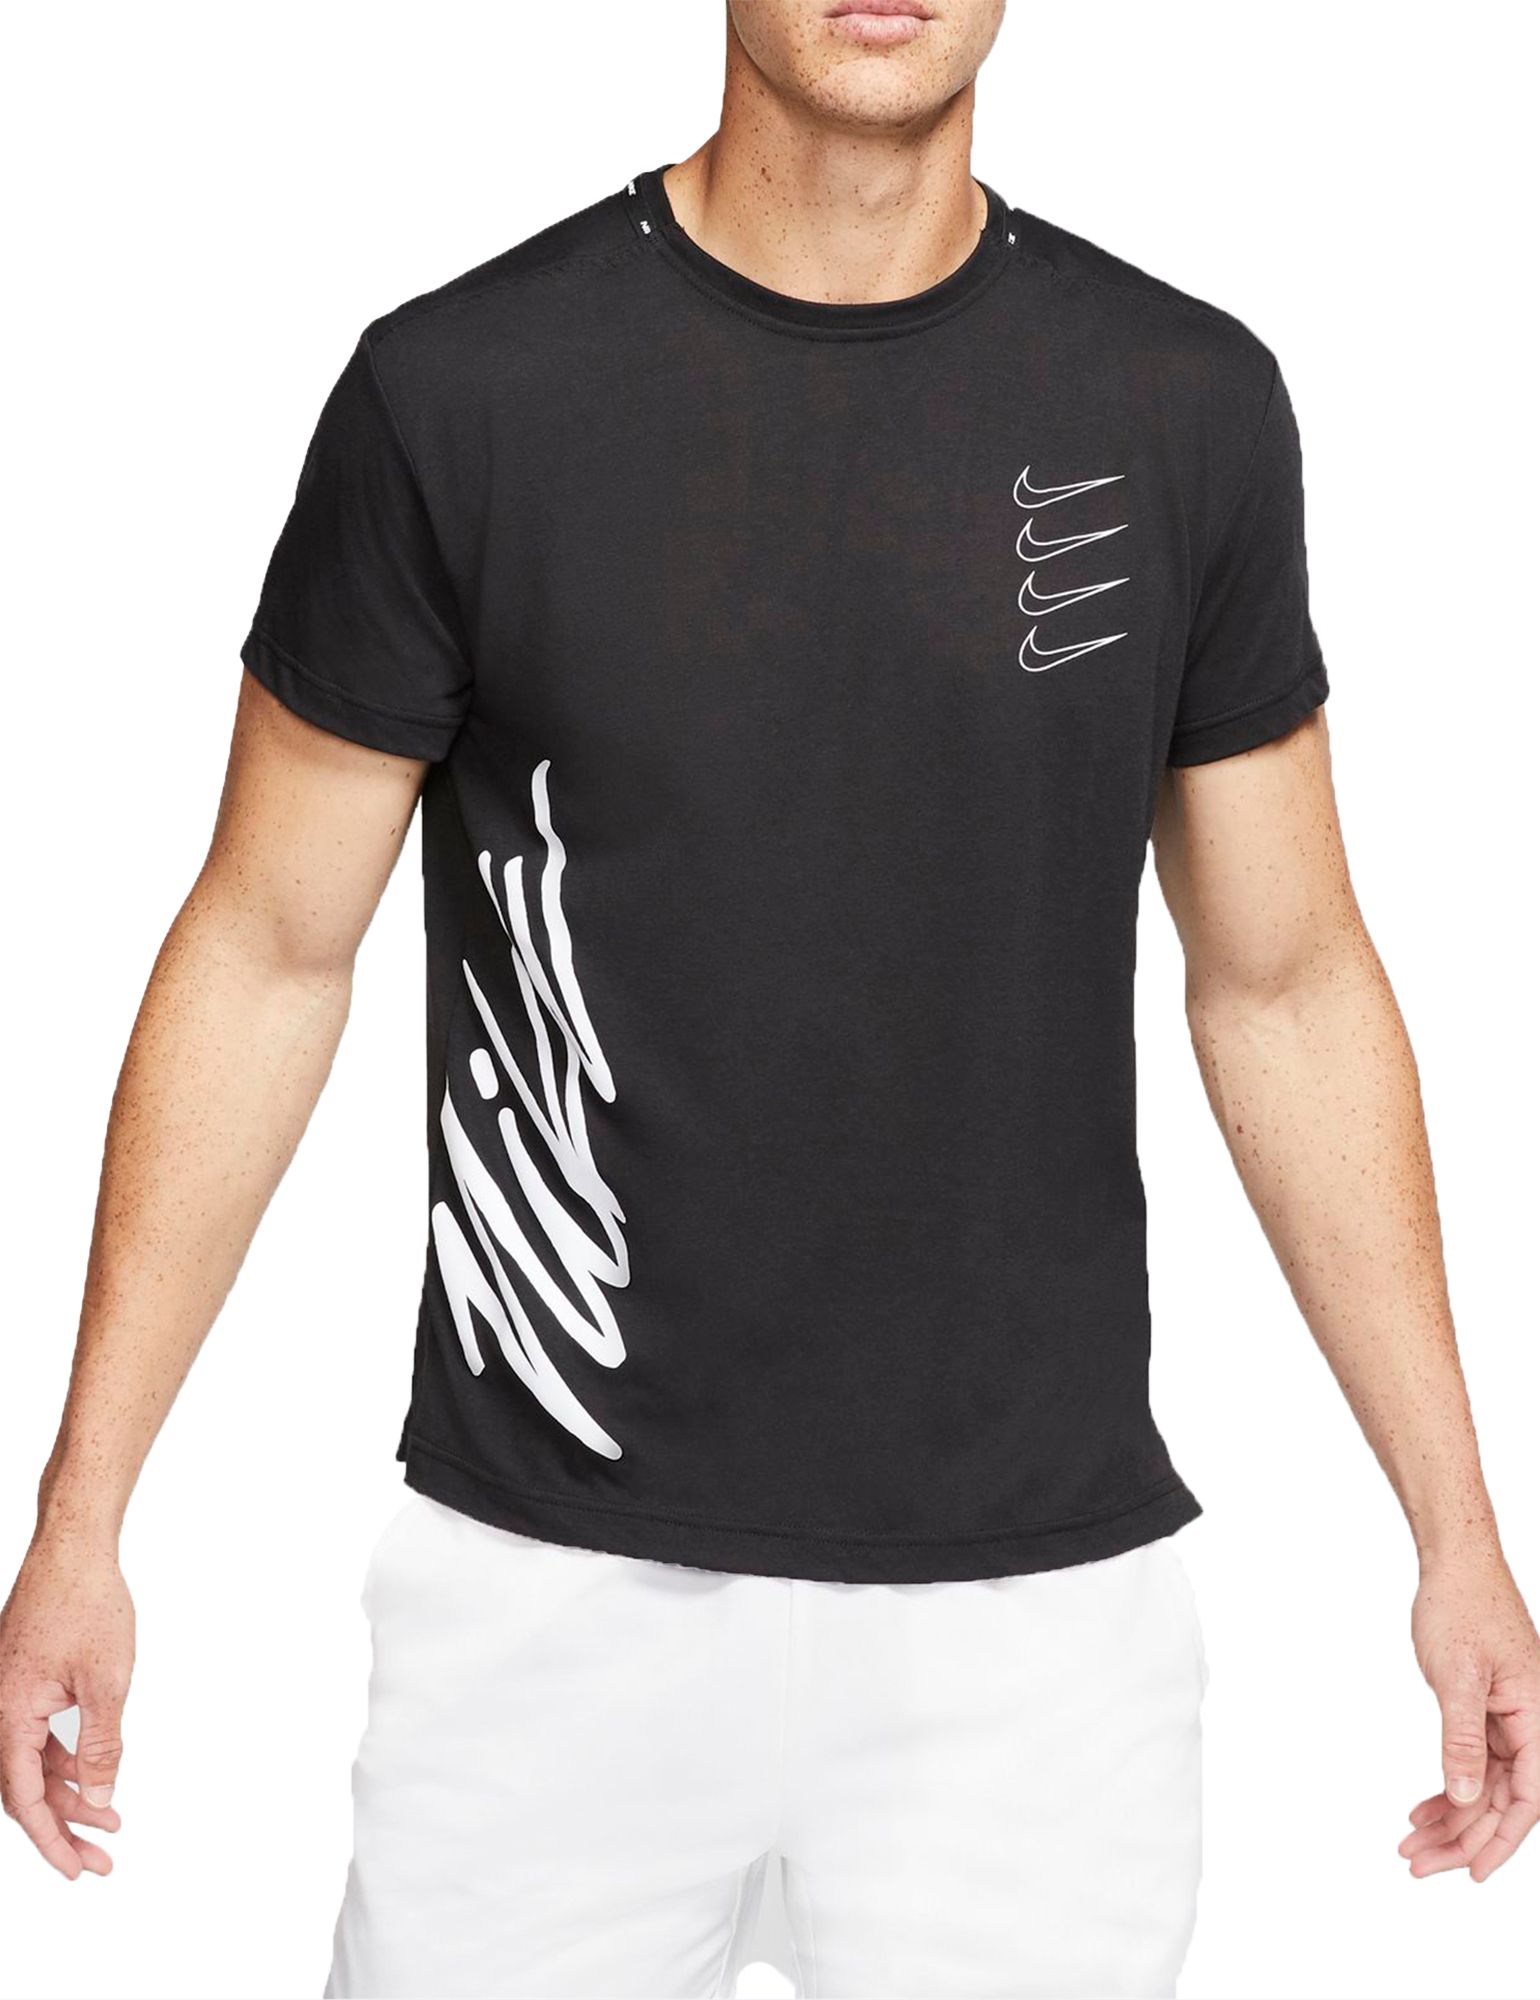 Nike Men's Dri-FIT Short Sleeve Training T-Shirt - .97